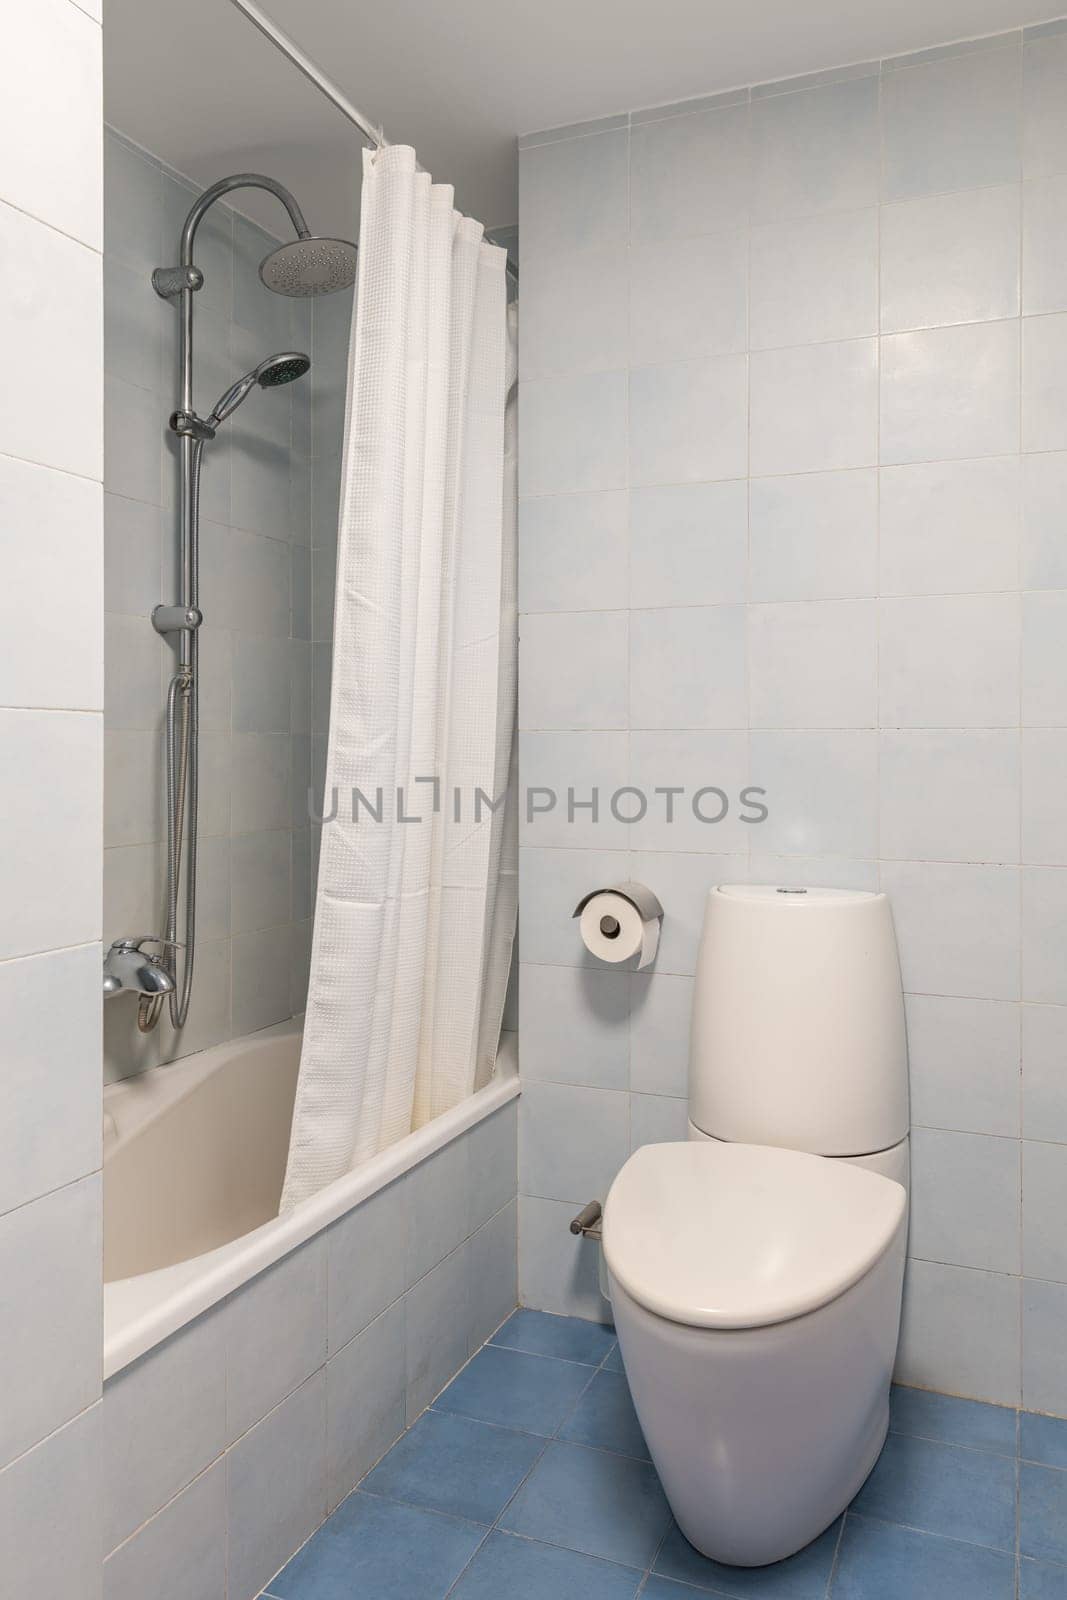 Toilet bowl near bathtub with shower in home bathroom by apavlin